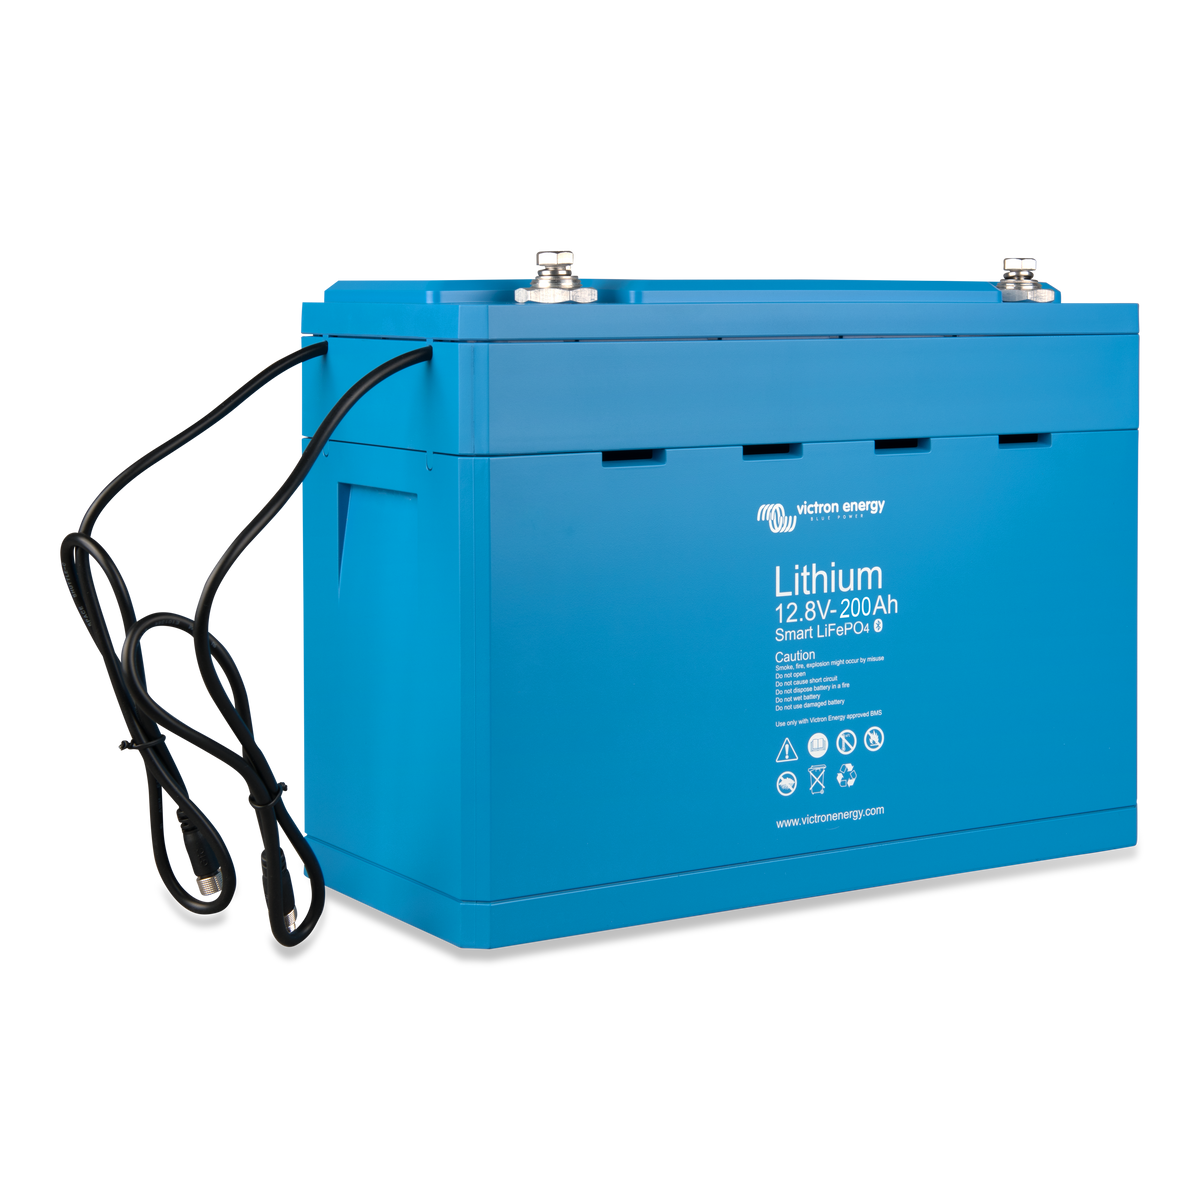 Victron LiFePO4 battery 12.8V/200Ah Smart BAT512120610